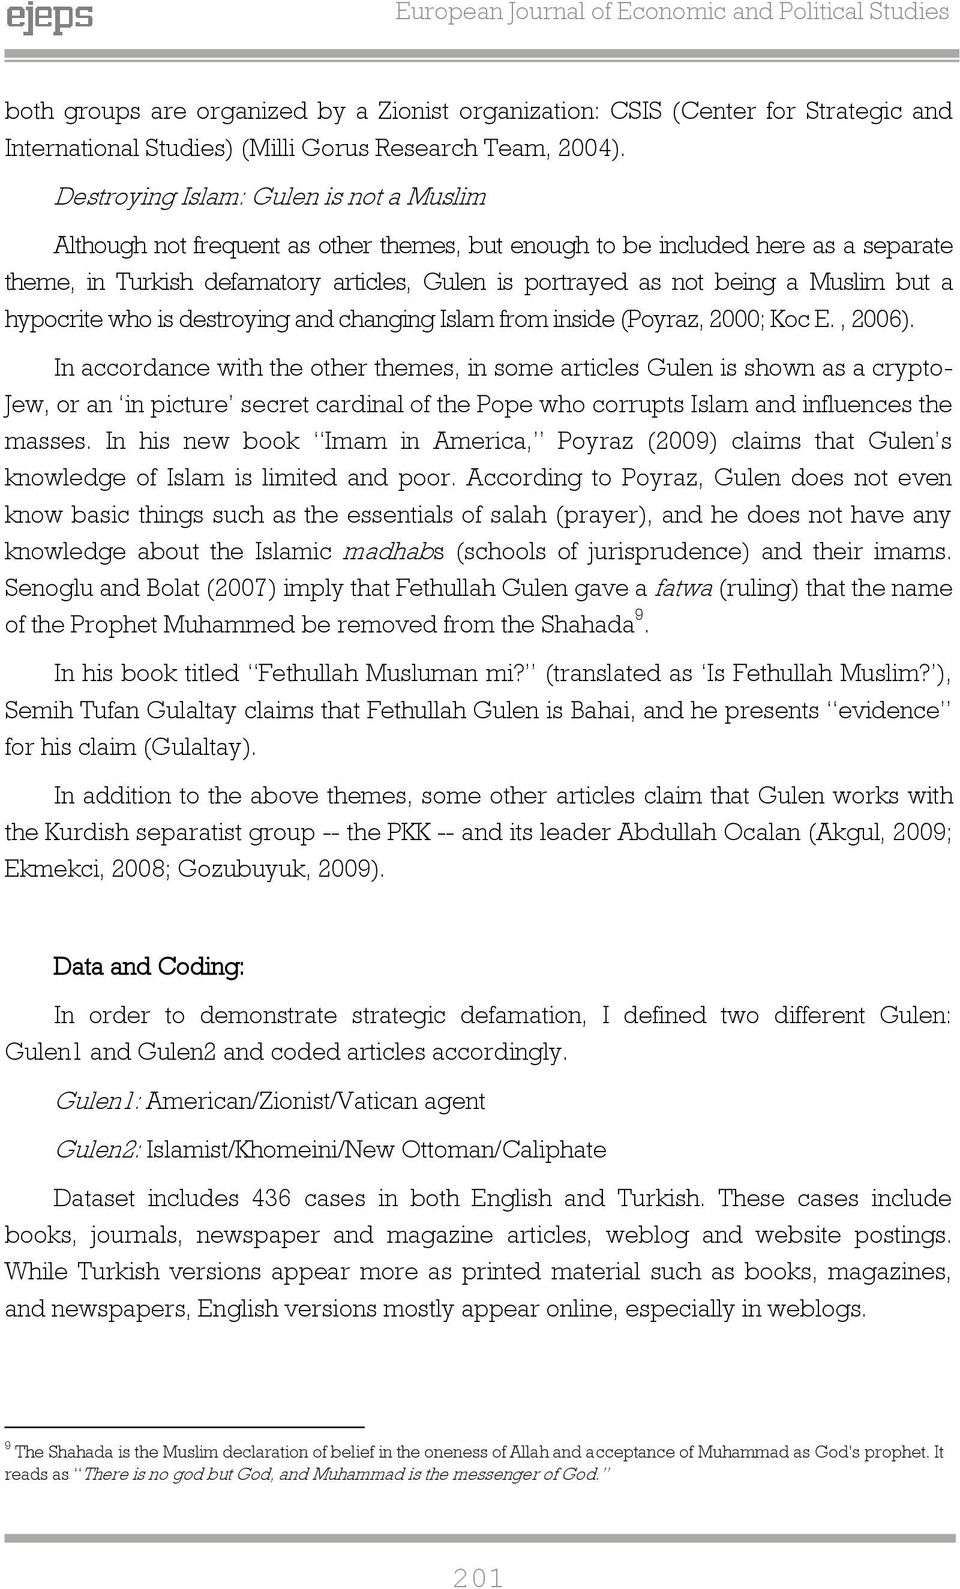 but a hypocrite who is destroyin and chanin Islam from inside (Poyraz, 2000; Koc E., 2006).